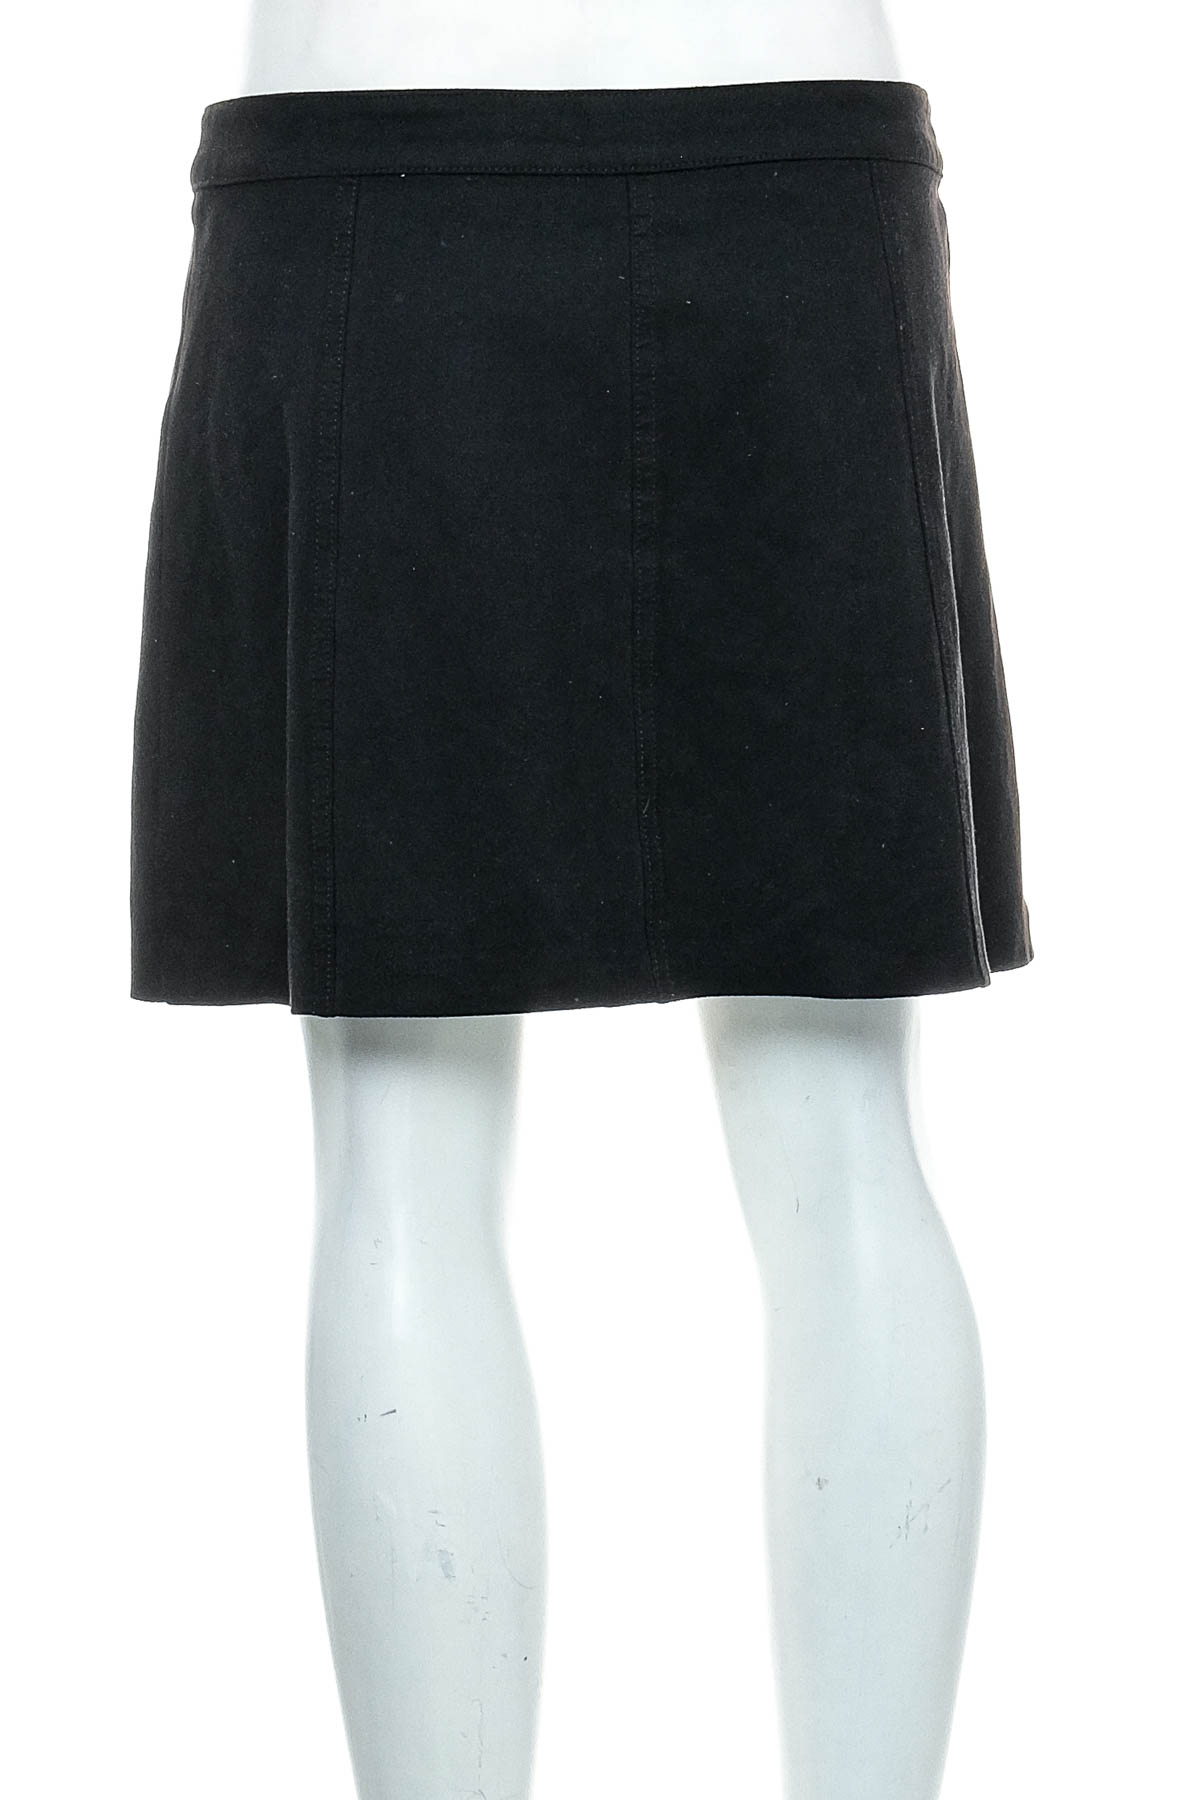 Female shorts - Zara Trafaluc - 1